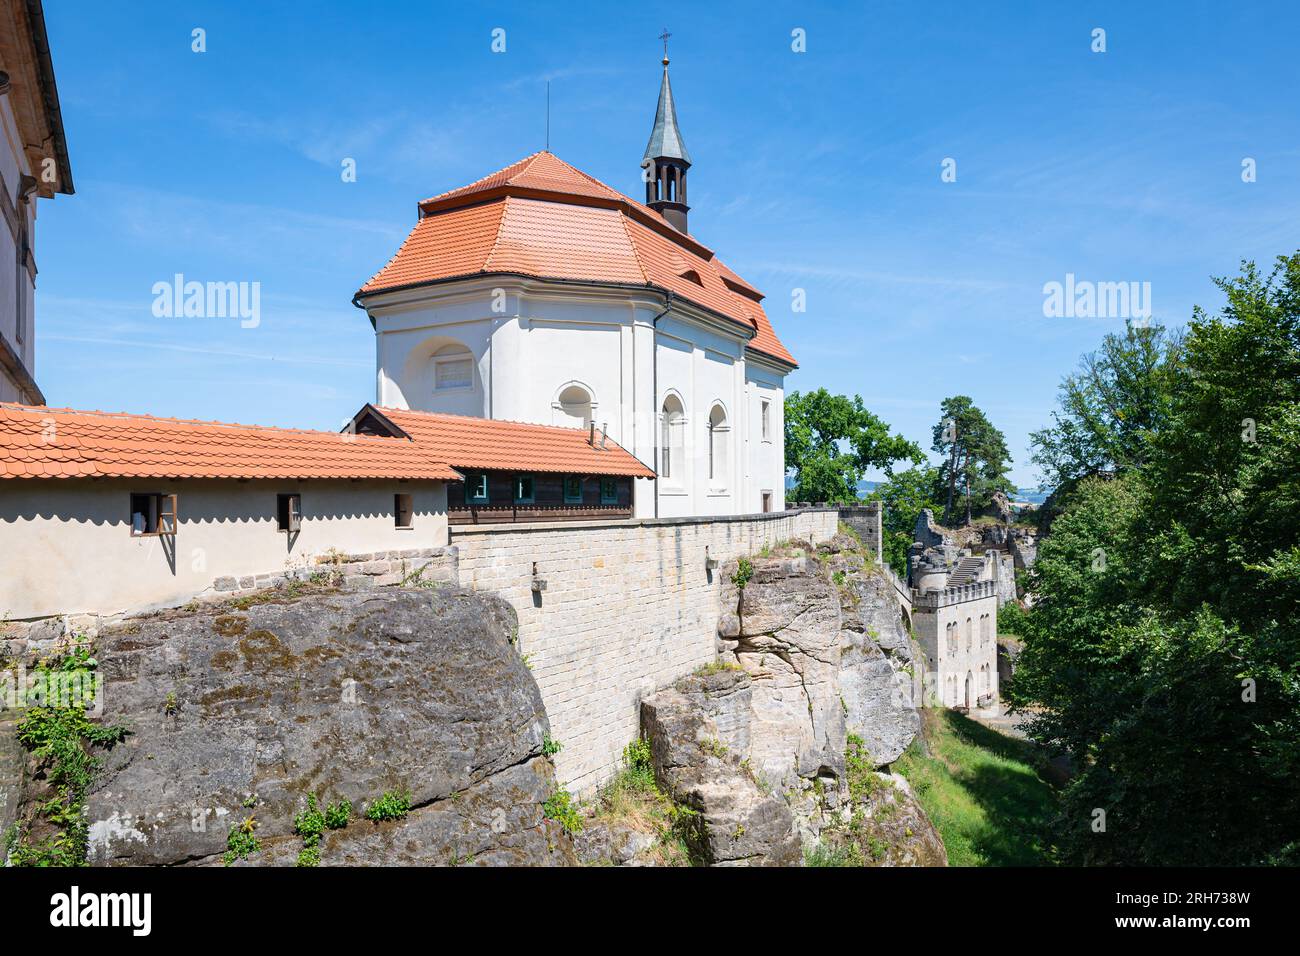 Church in the courtyard of Valdštejn Castle near the town of Turnov, Czechia Stock Photo